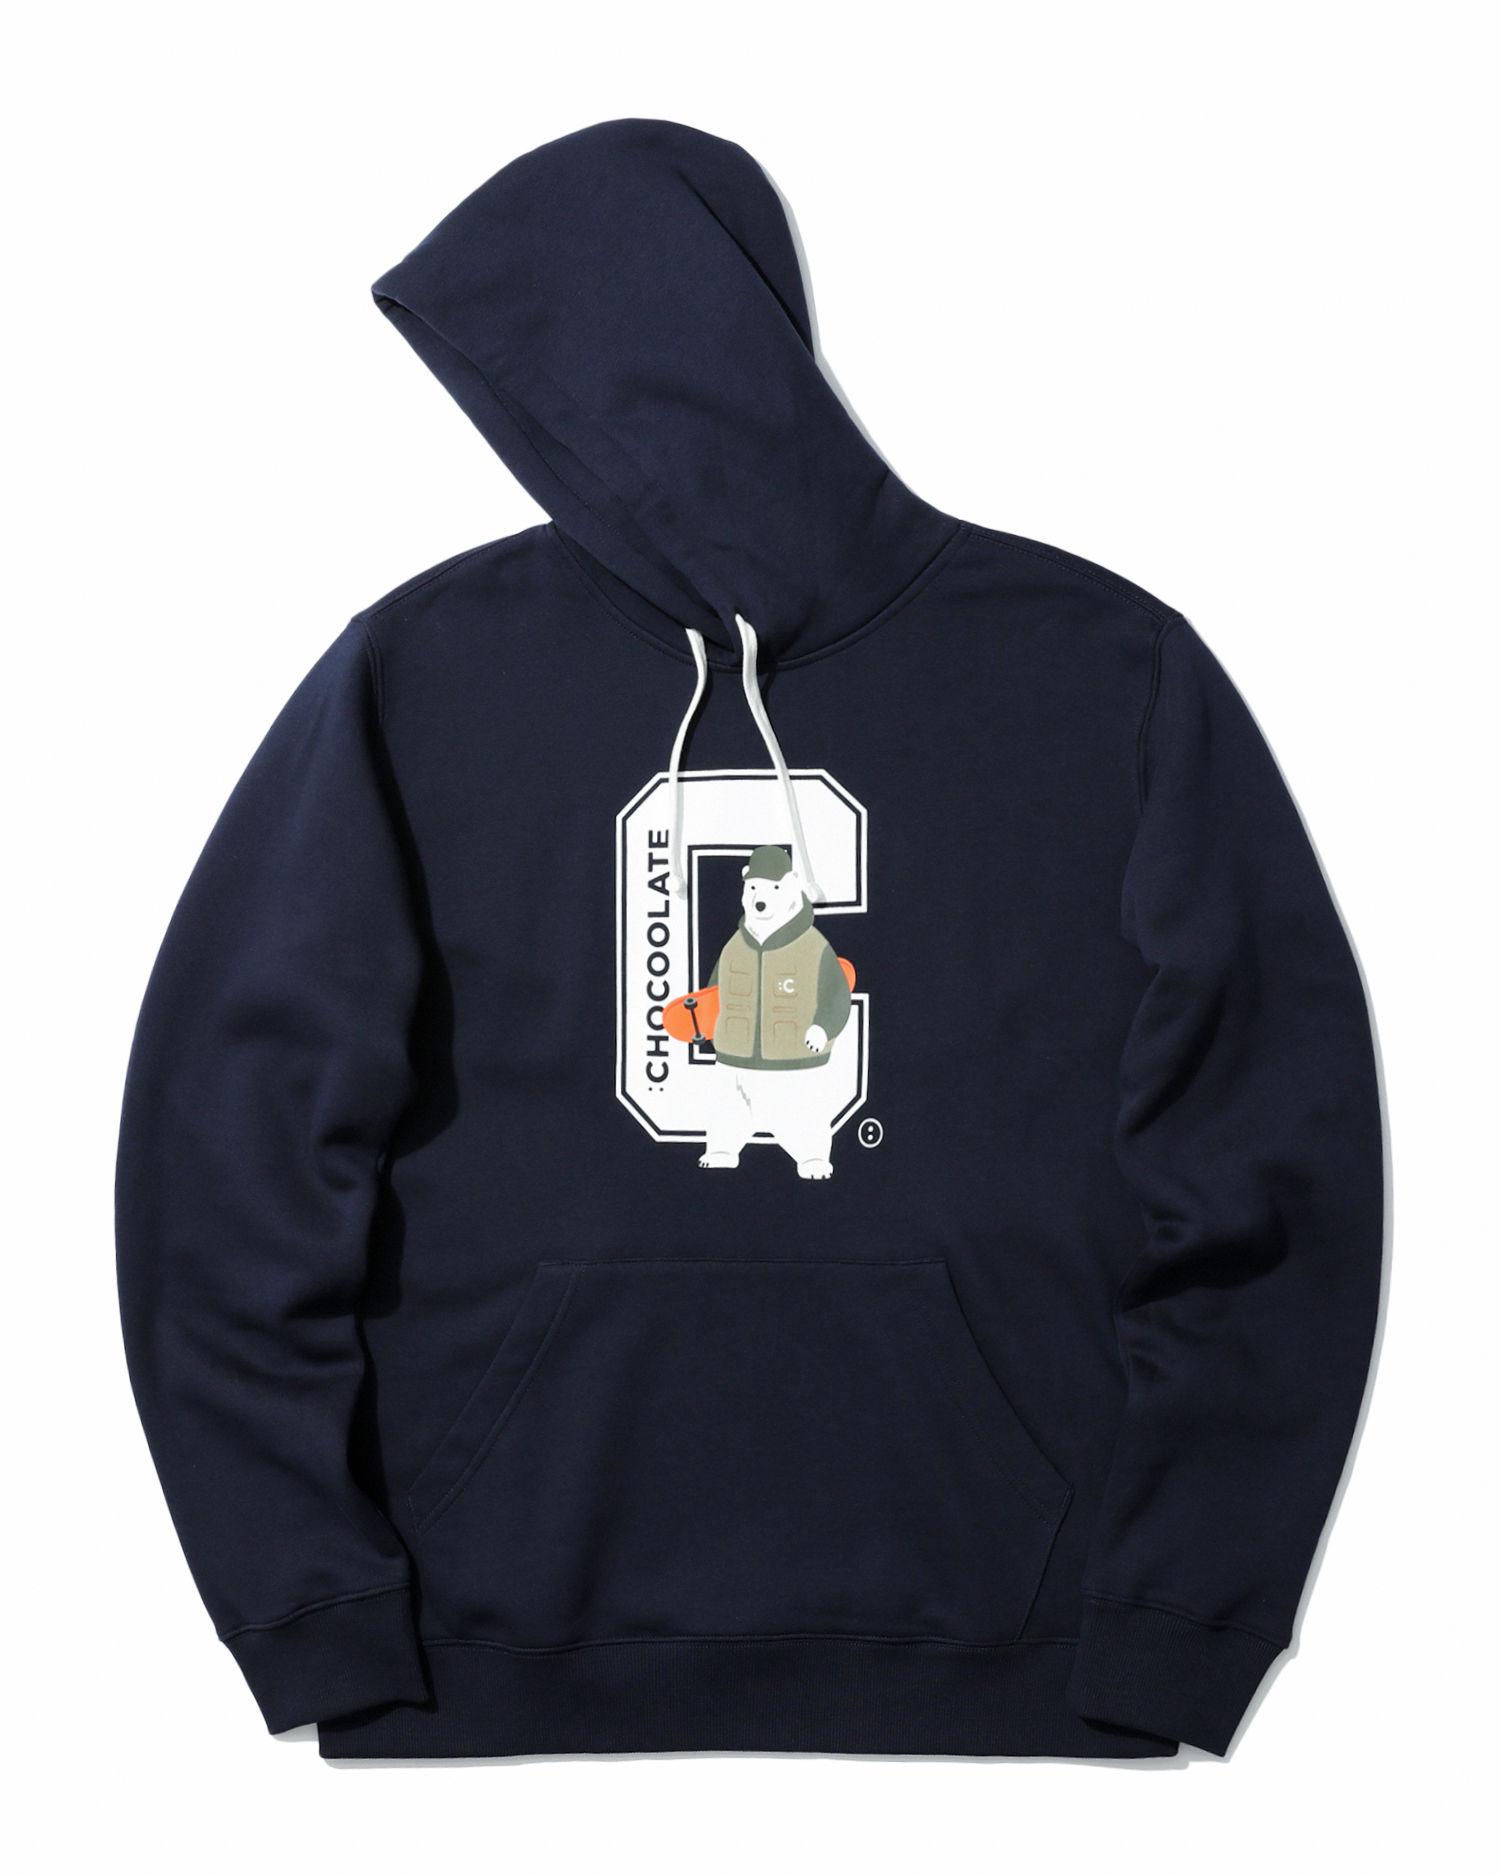 Polar bear college hoodie by :CHOCOOLATE